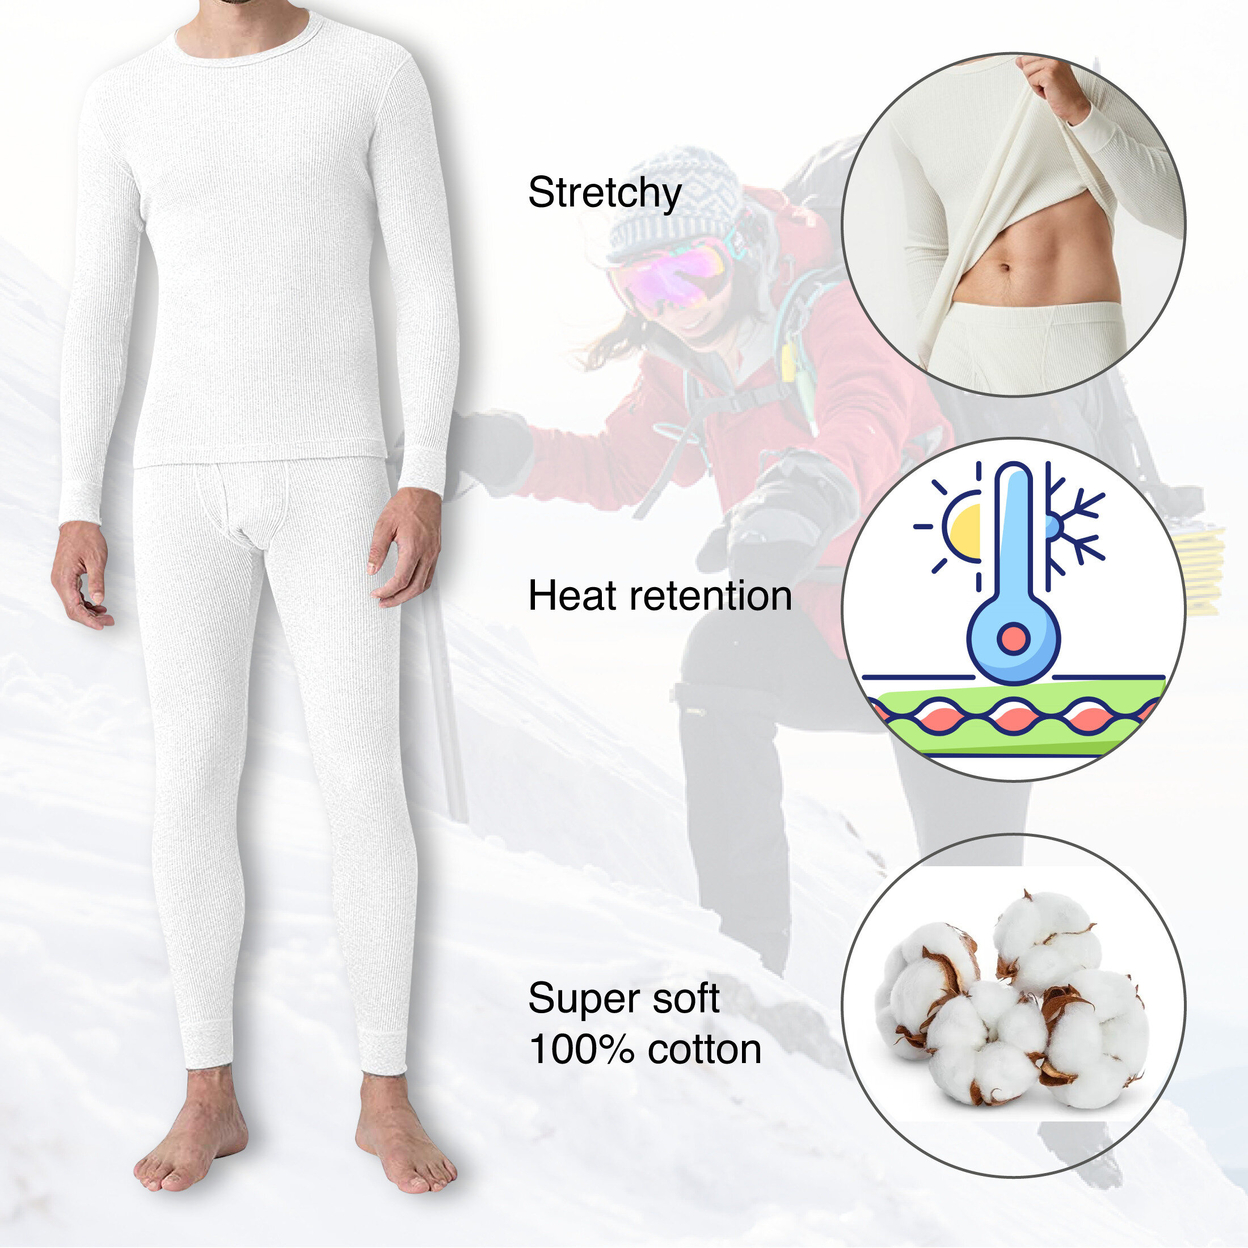 Multi-Set: Men's Super-Soft Cotton Waffle Knit Winter Thermal Underwear Set - 1-pack, Medium